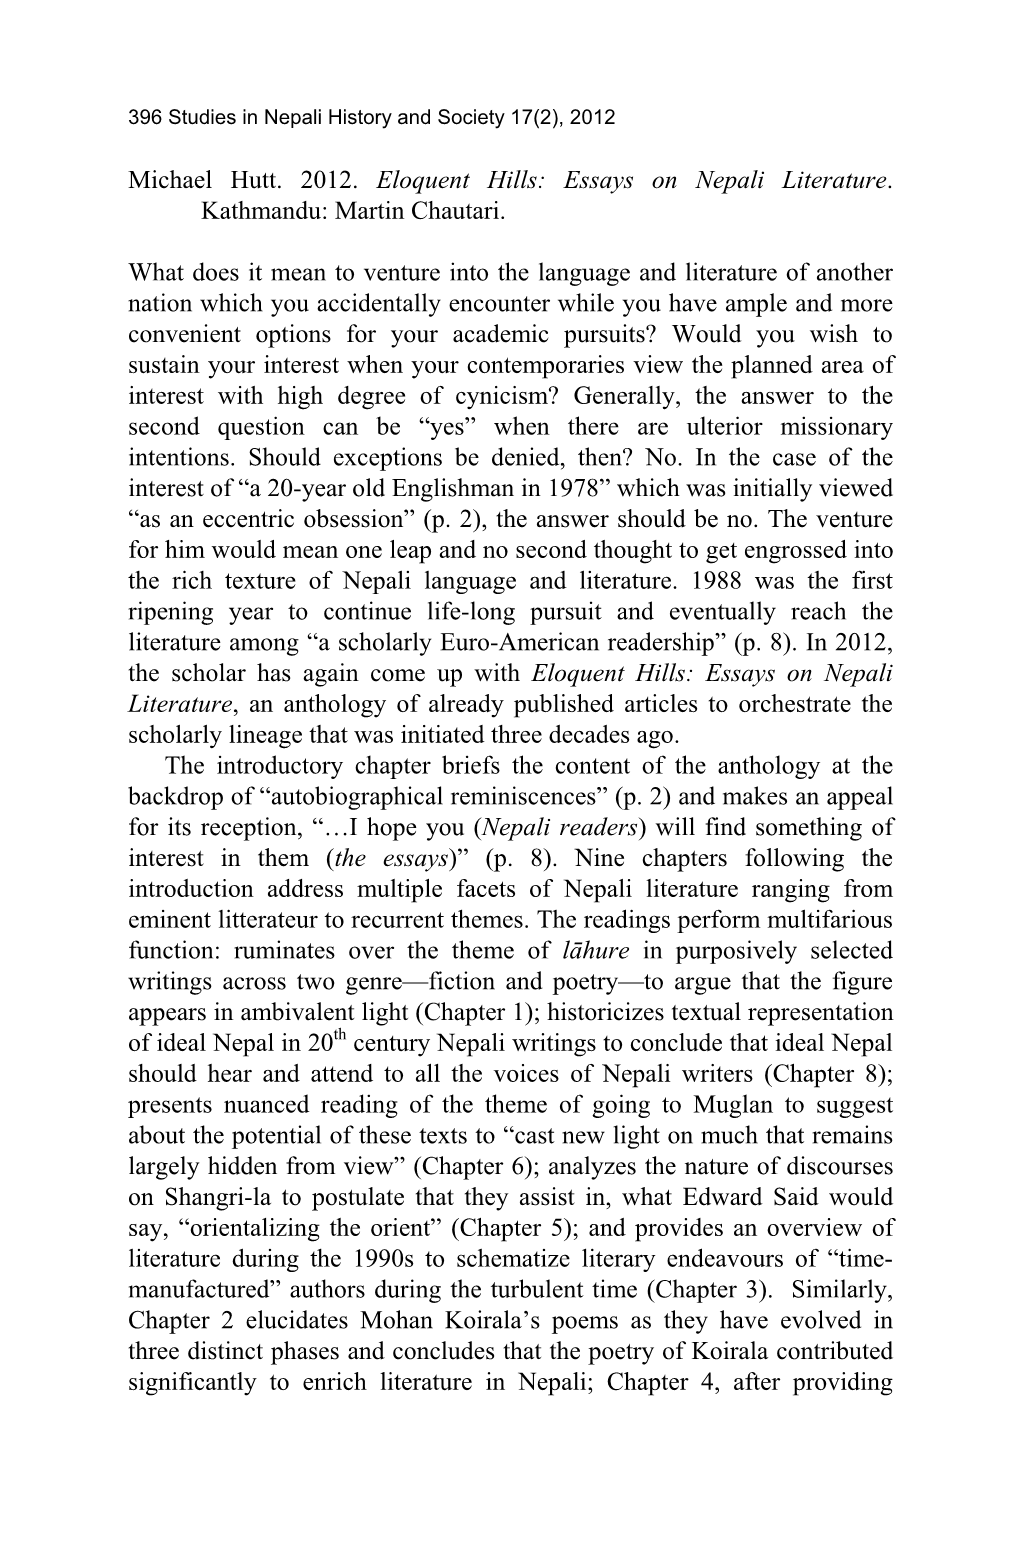 Michael Hutt. 2012. Eloquent Hills: Essays on Nepali Literature